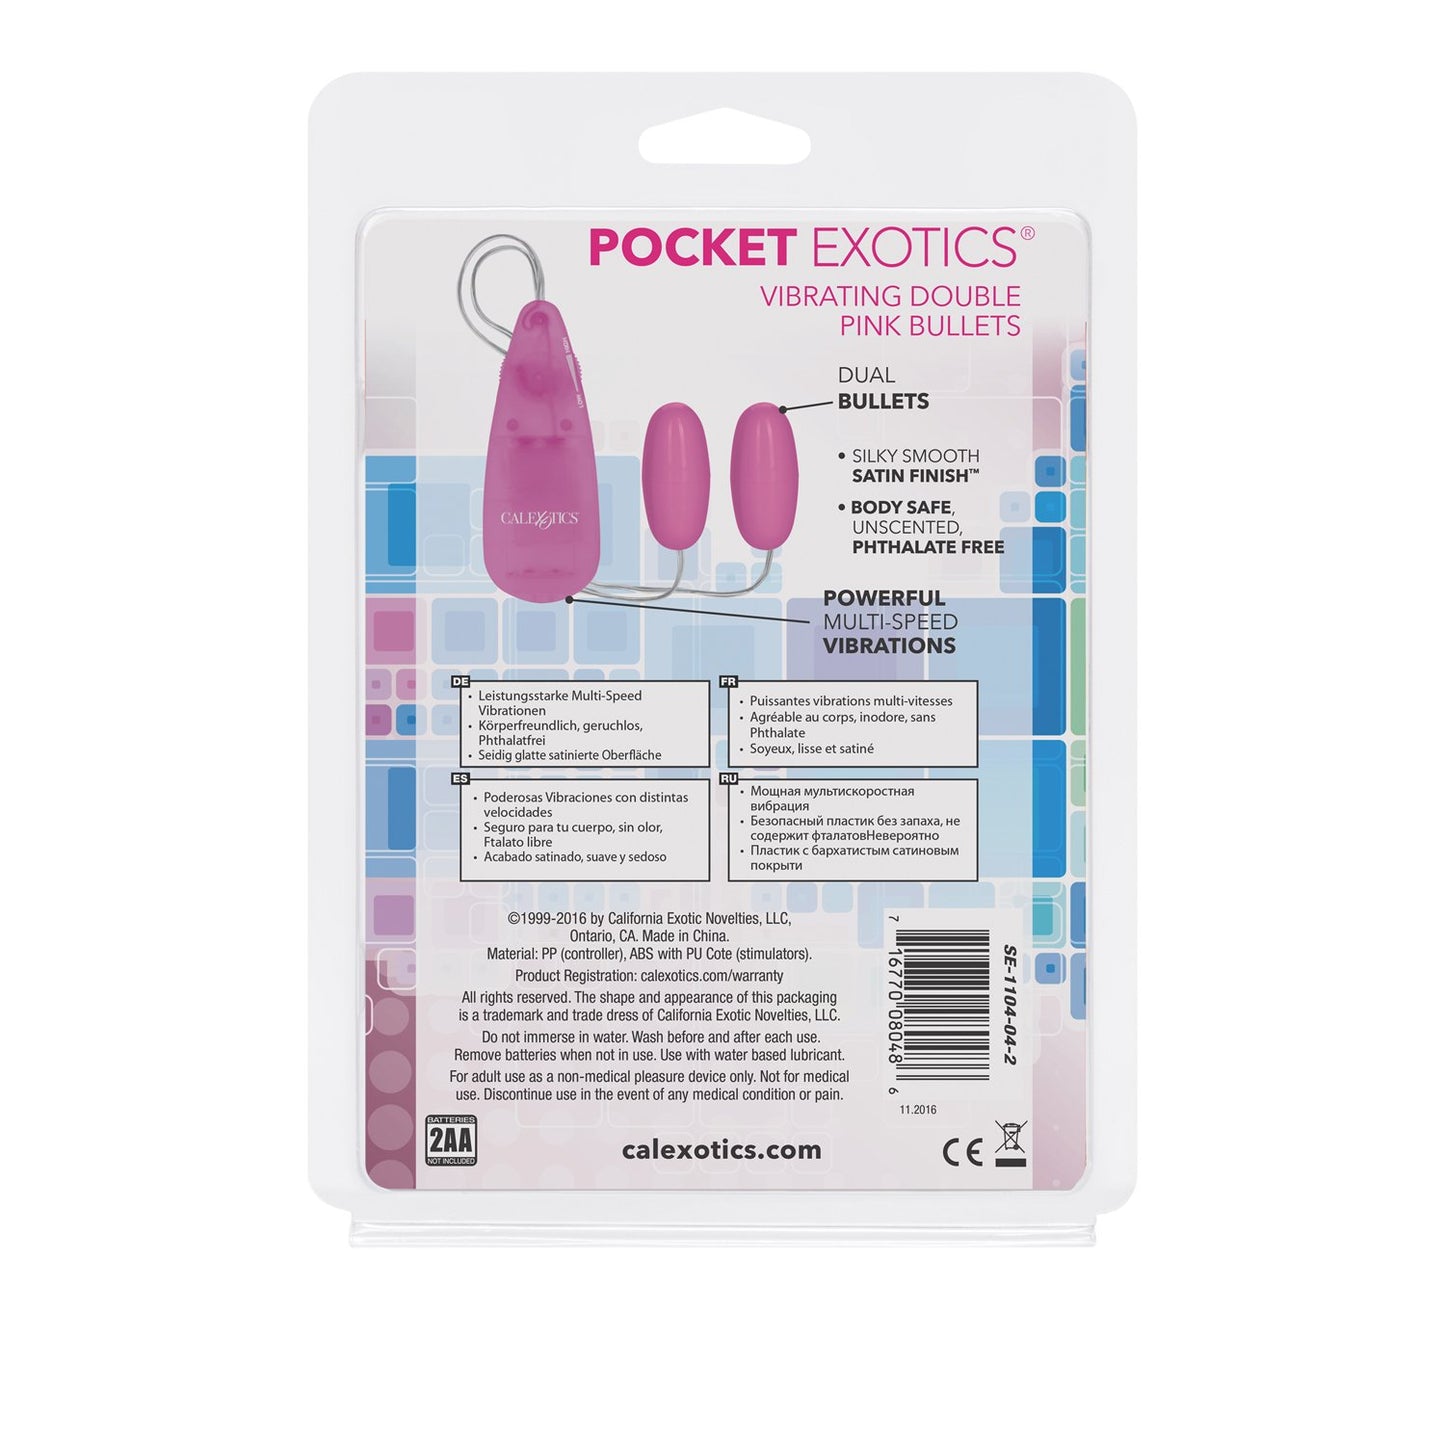 Pocket Exotics Vibrating Double Pink Bullets